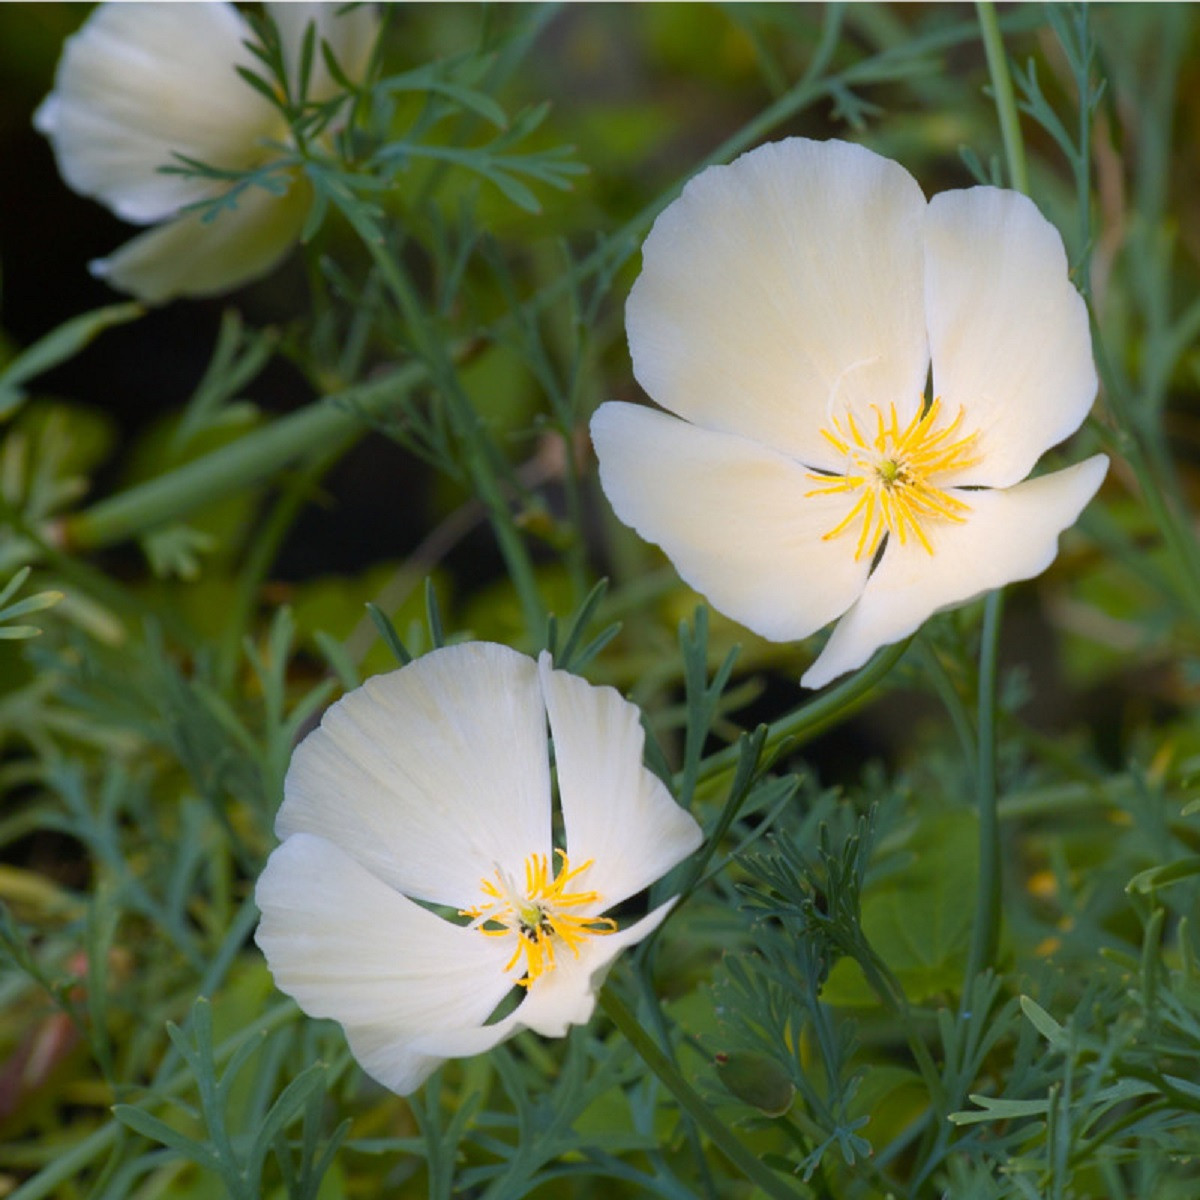 Sluncovka kalifornská bílá - Eschscholzia californica - semena sluncovky - 450 ks